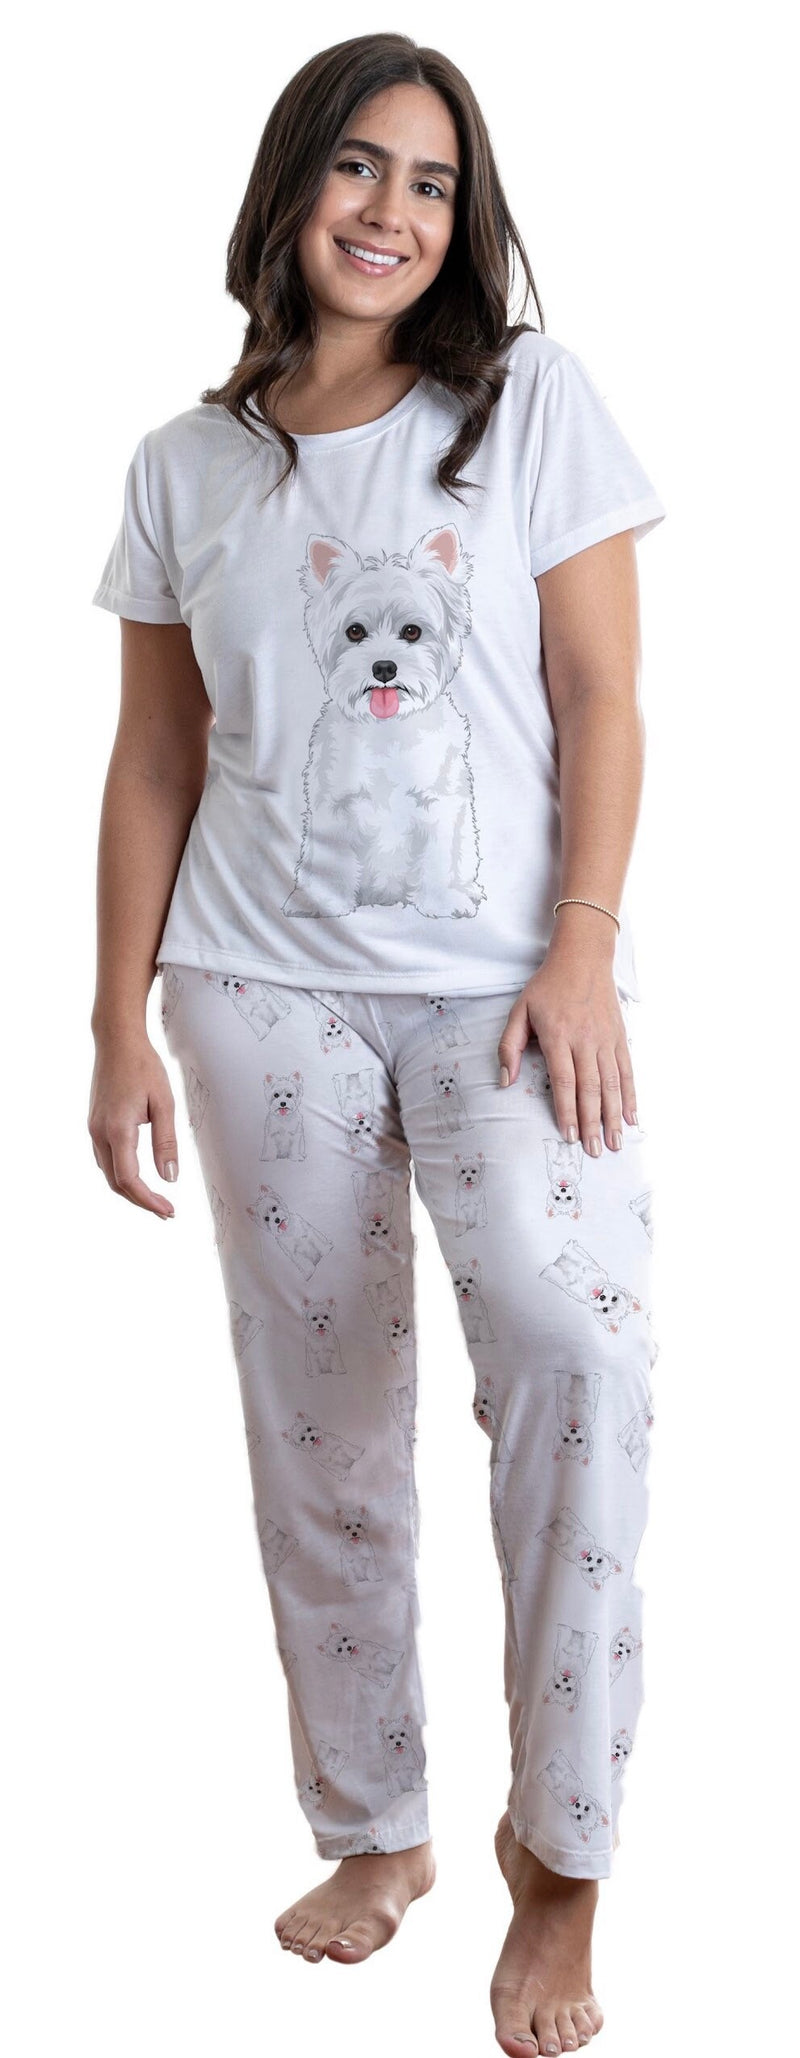 Westie Highland Terrier 2 piece Pj set with long pants